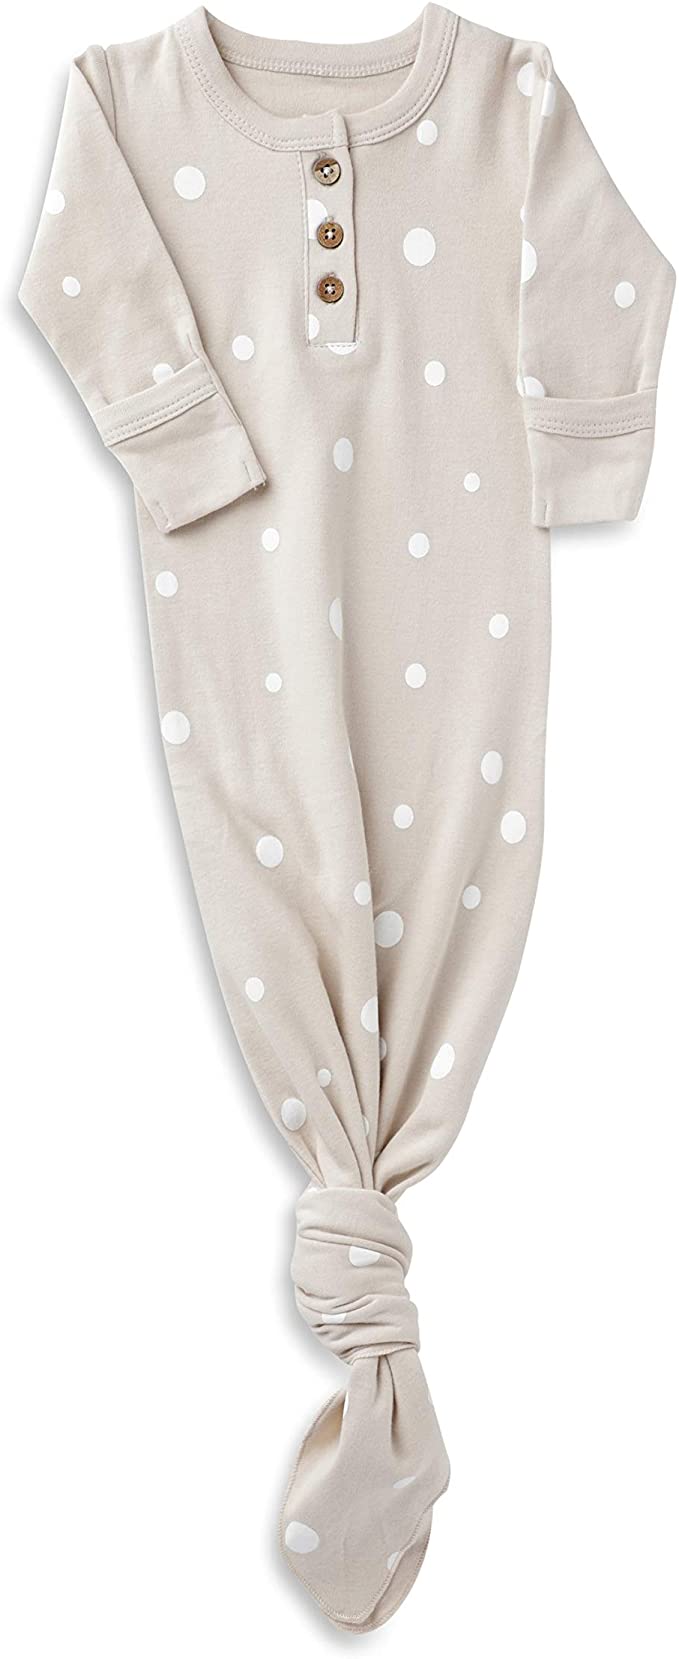 MakeMake Organics Organic Cotton Knotted Sleep Gown Wearable Blanket Sleeper Size - New Born, Polka